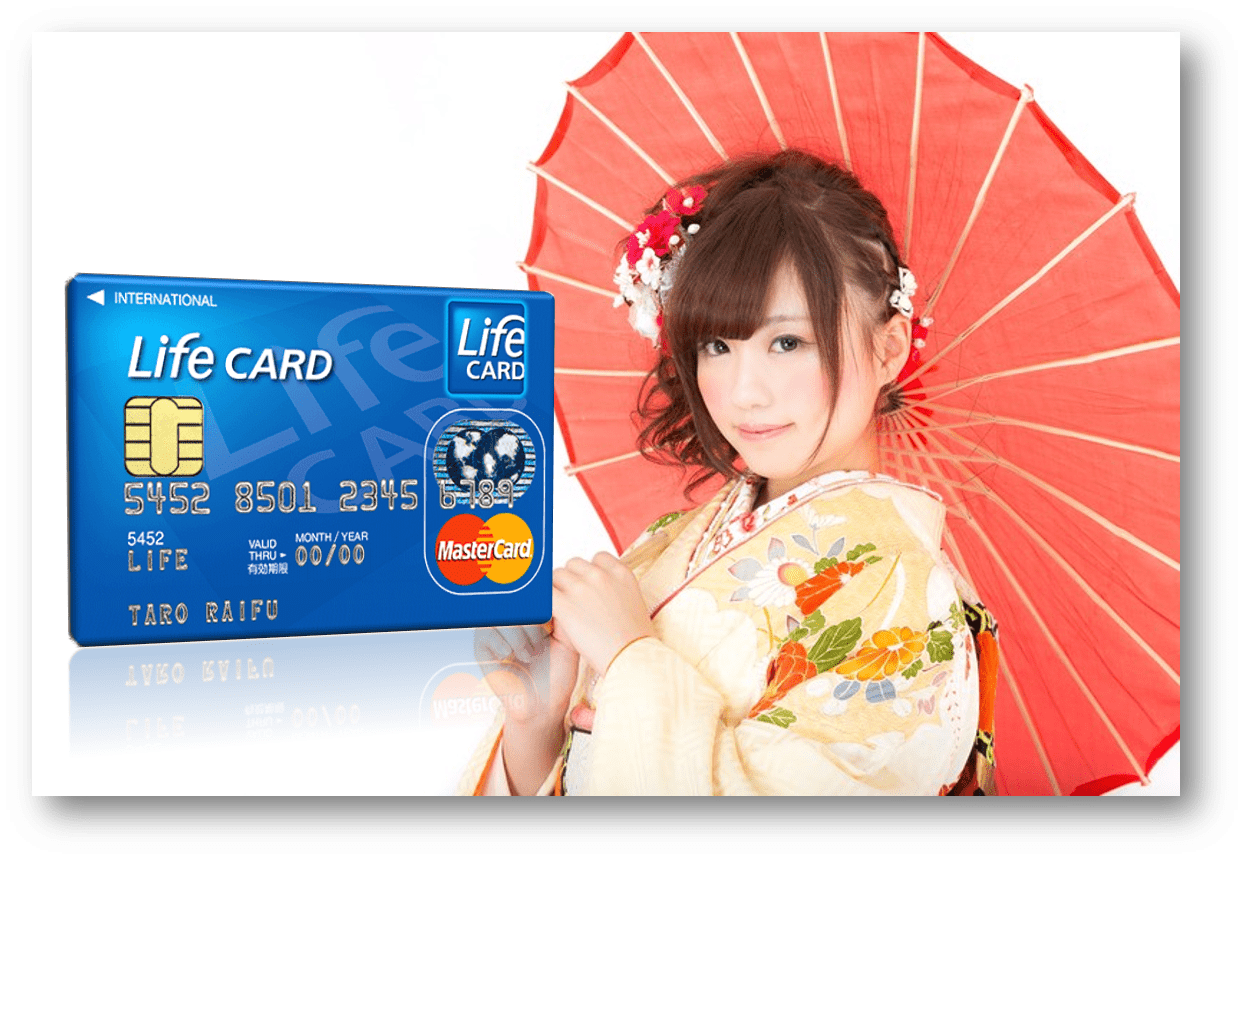 Image-Life-card-credit